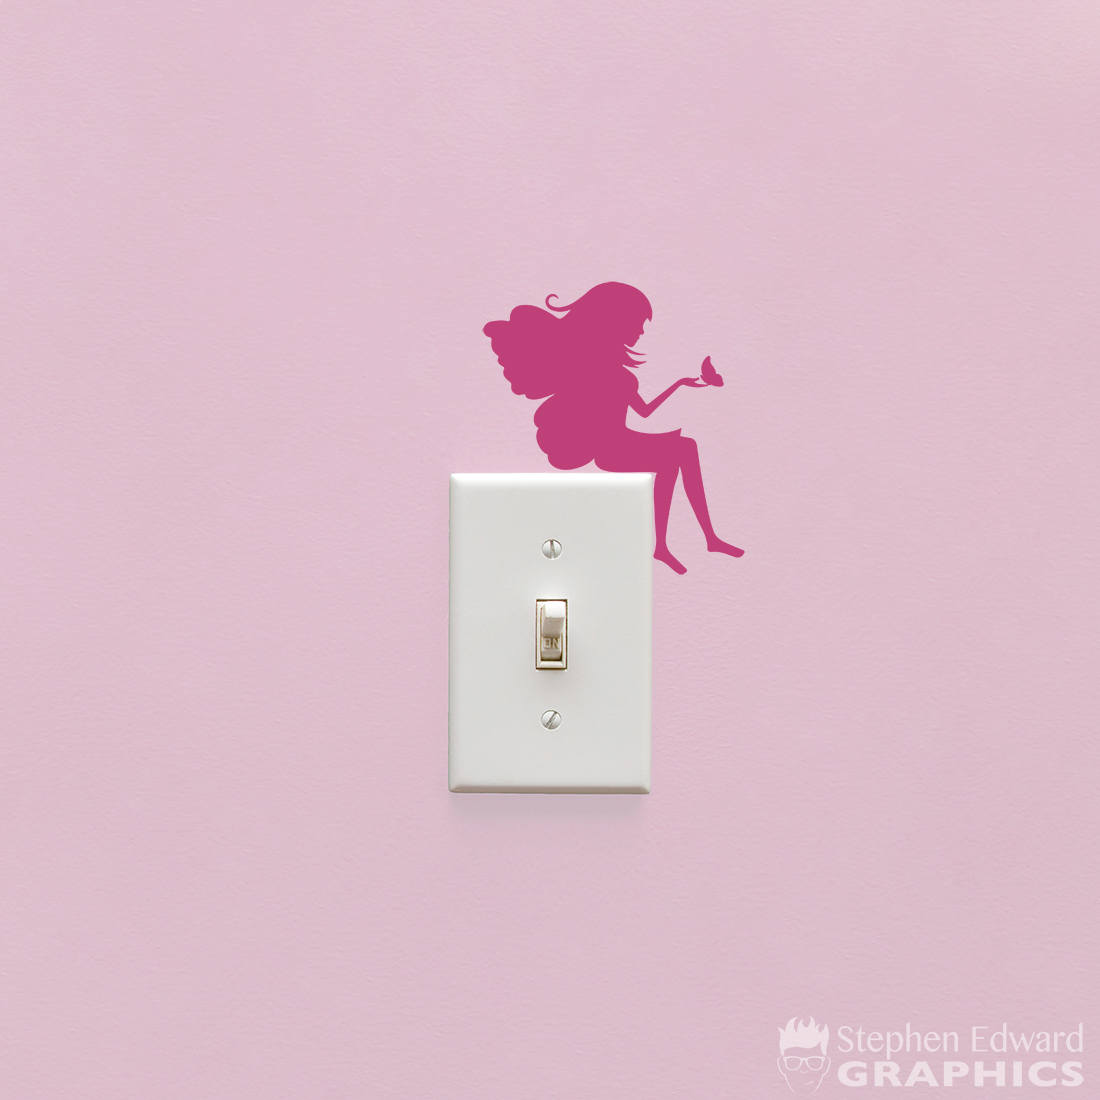 Pink Fairy Princess Butterfly Light Switch Sticker vinyl cover skin Single 